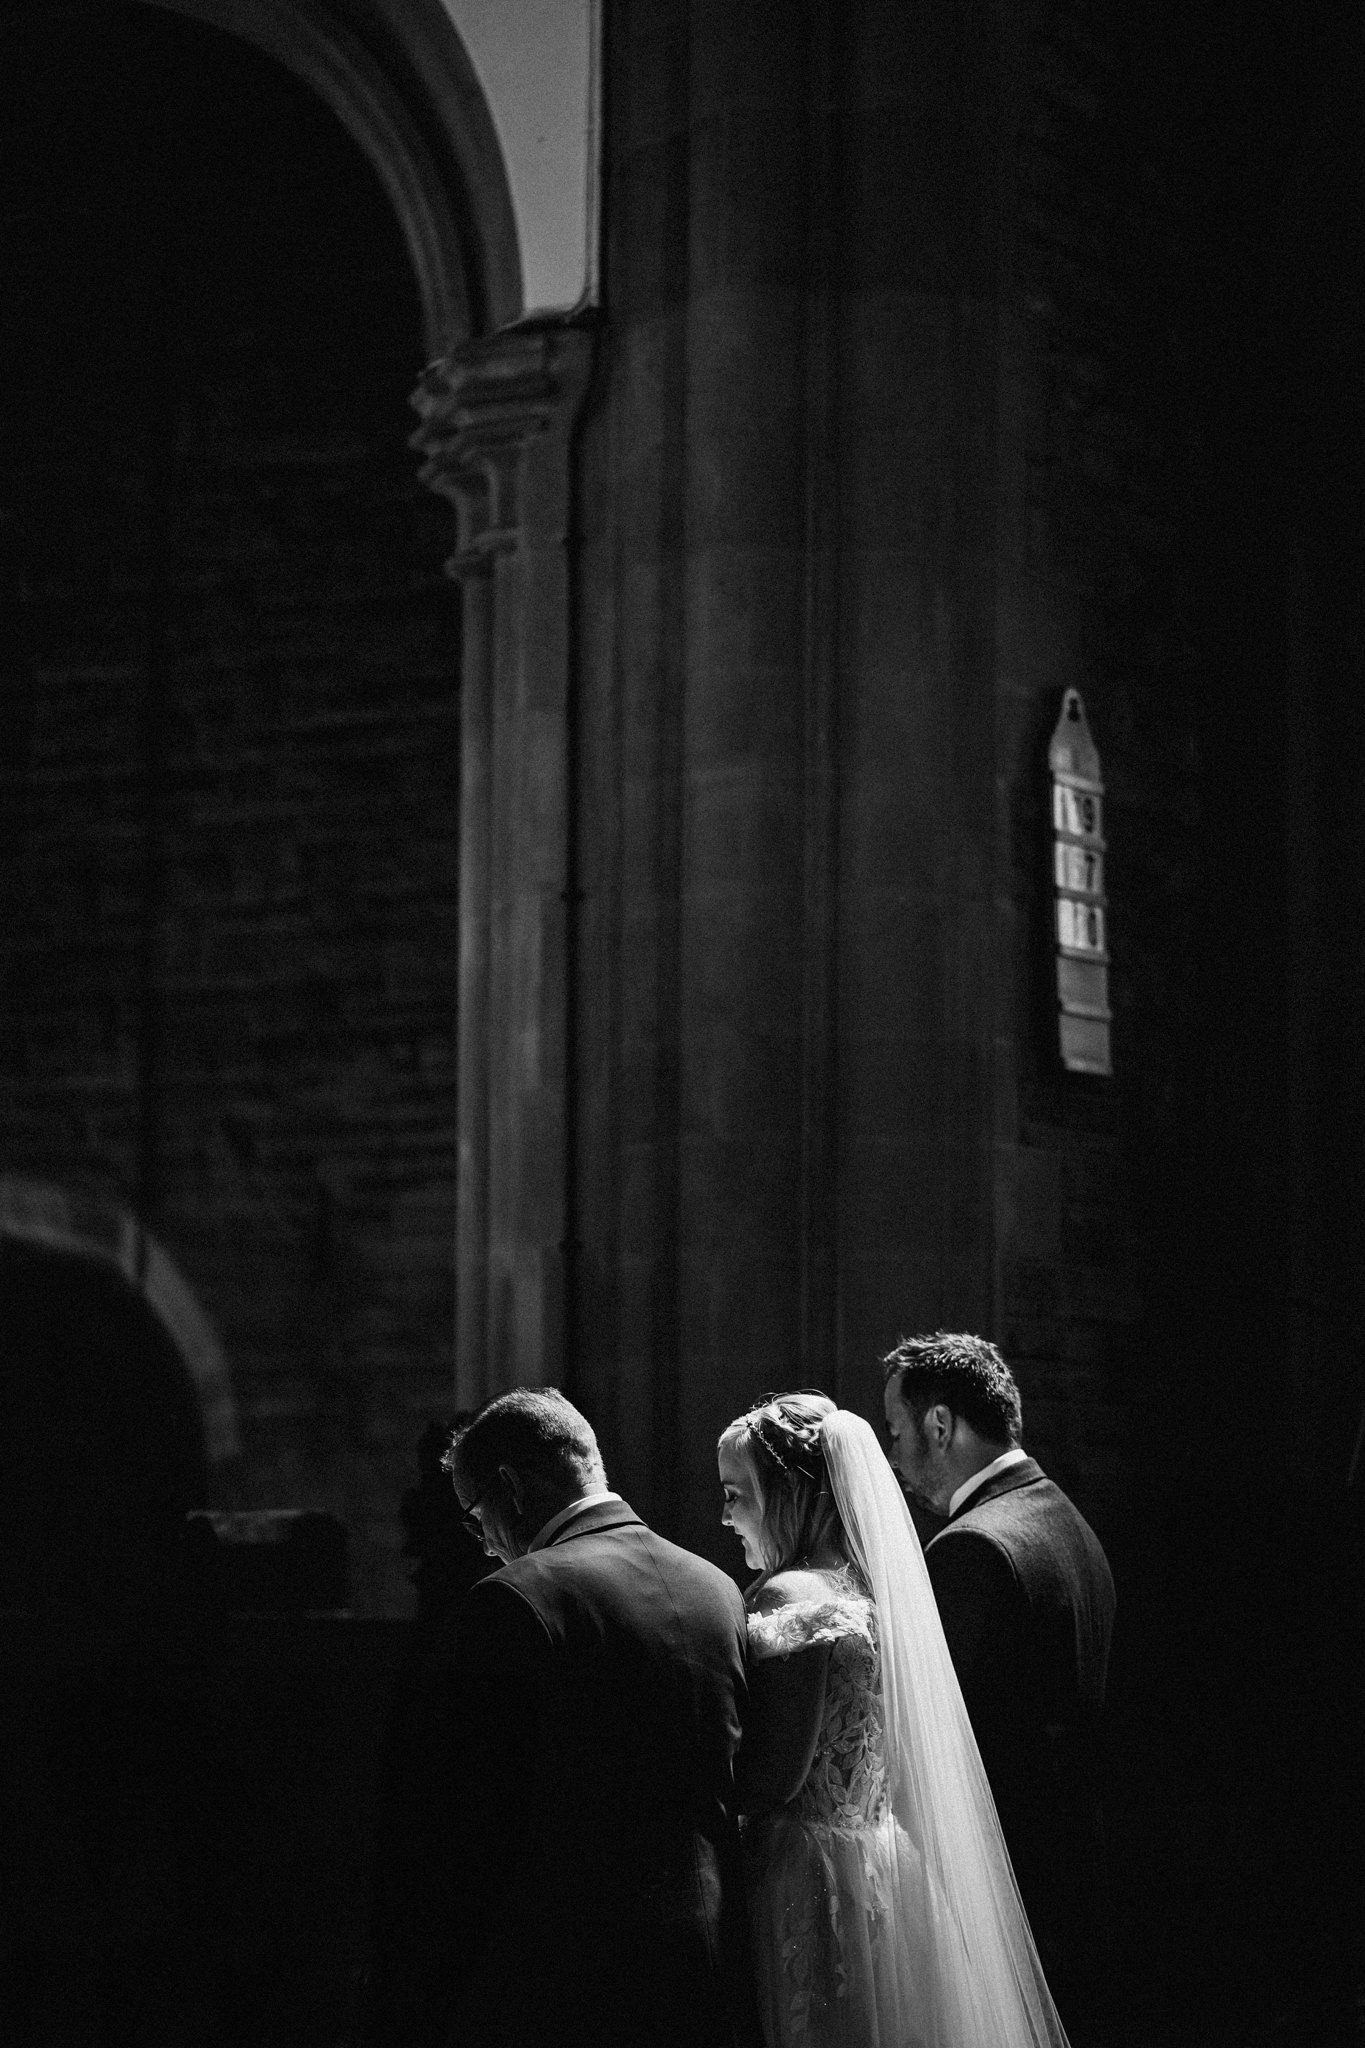 Light falling on bride in church